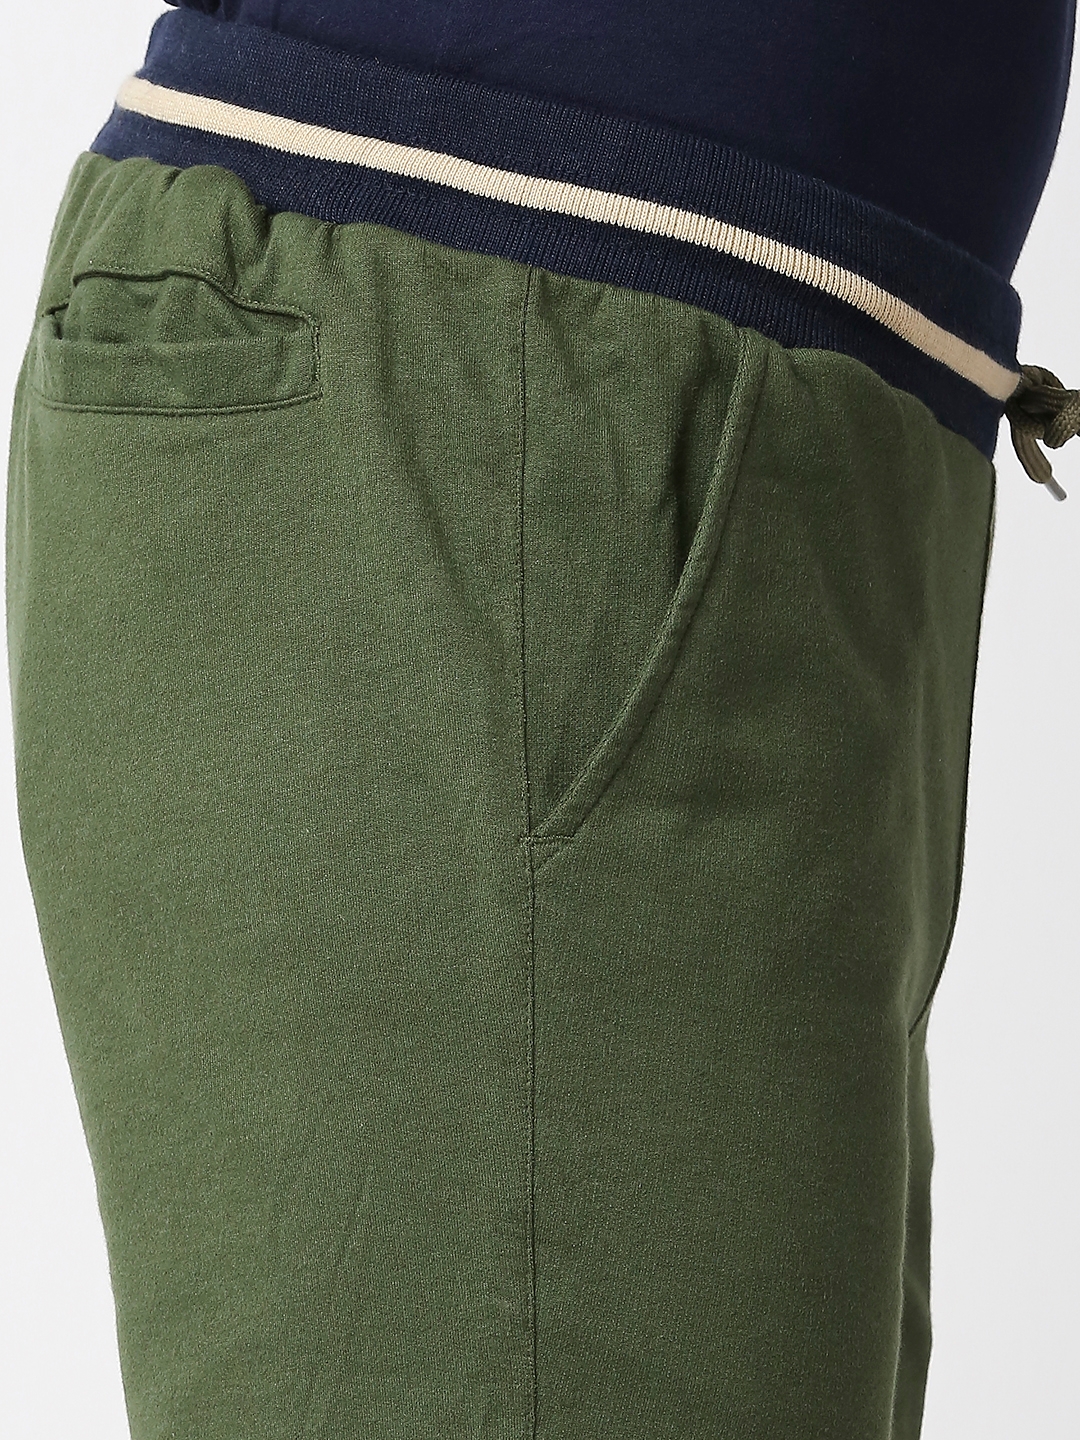 Men's Slim Fit Green Cotton Blend Casual Joogers